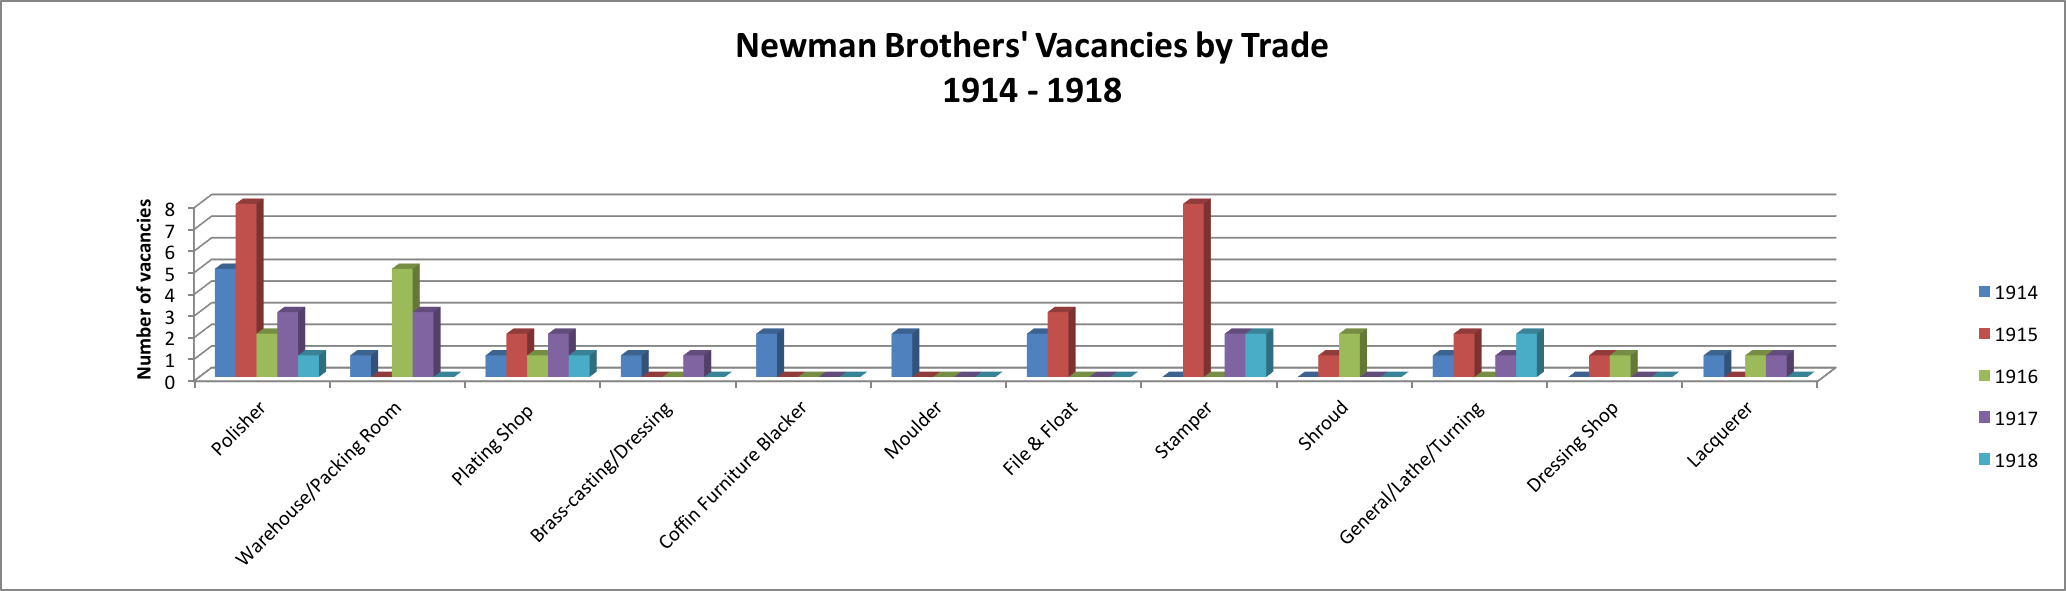 Chart showing vacancies by trade at newman brothers